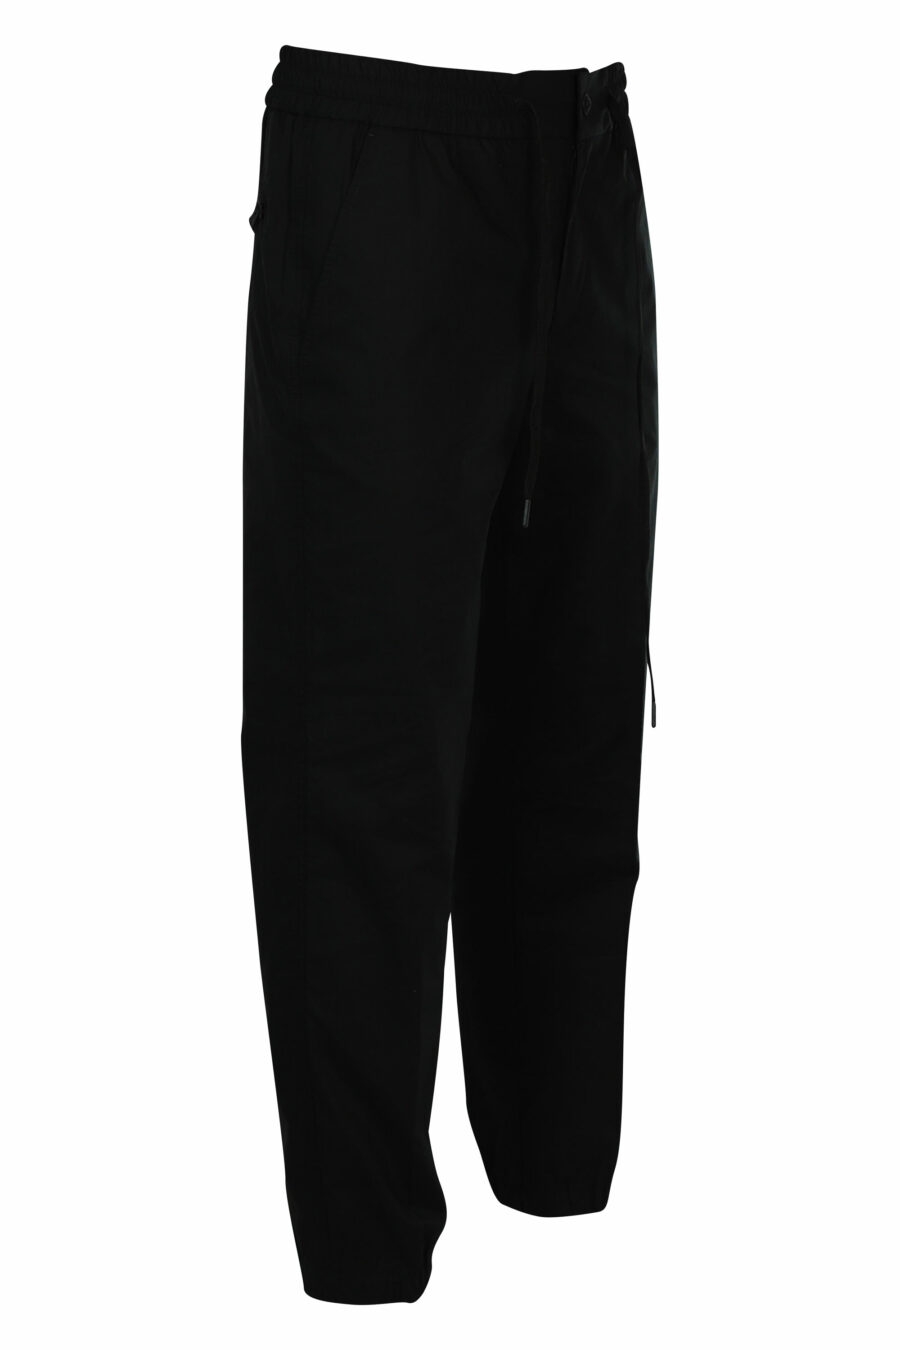 Pantalon de pêche noir avec logo - 8052019219876 2